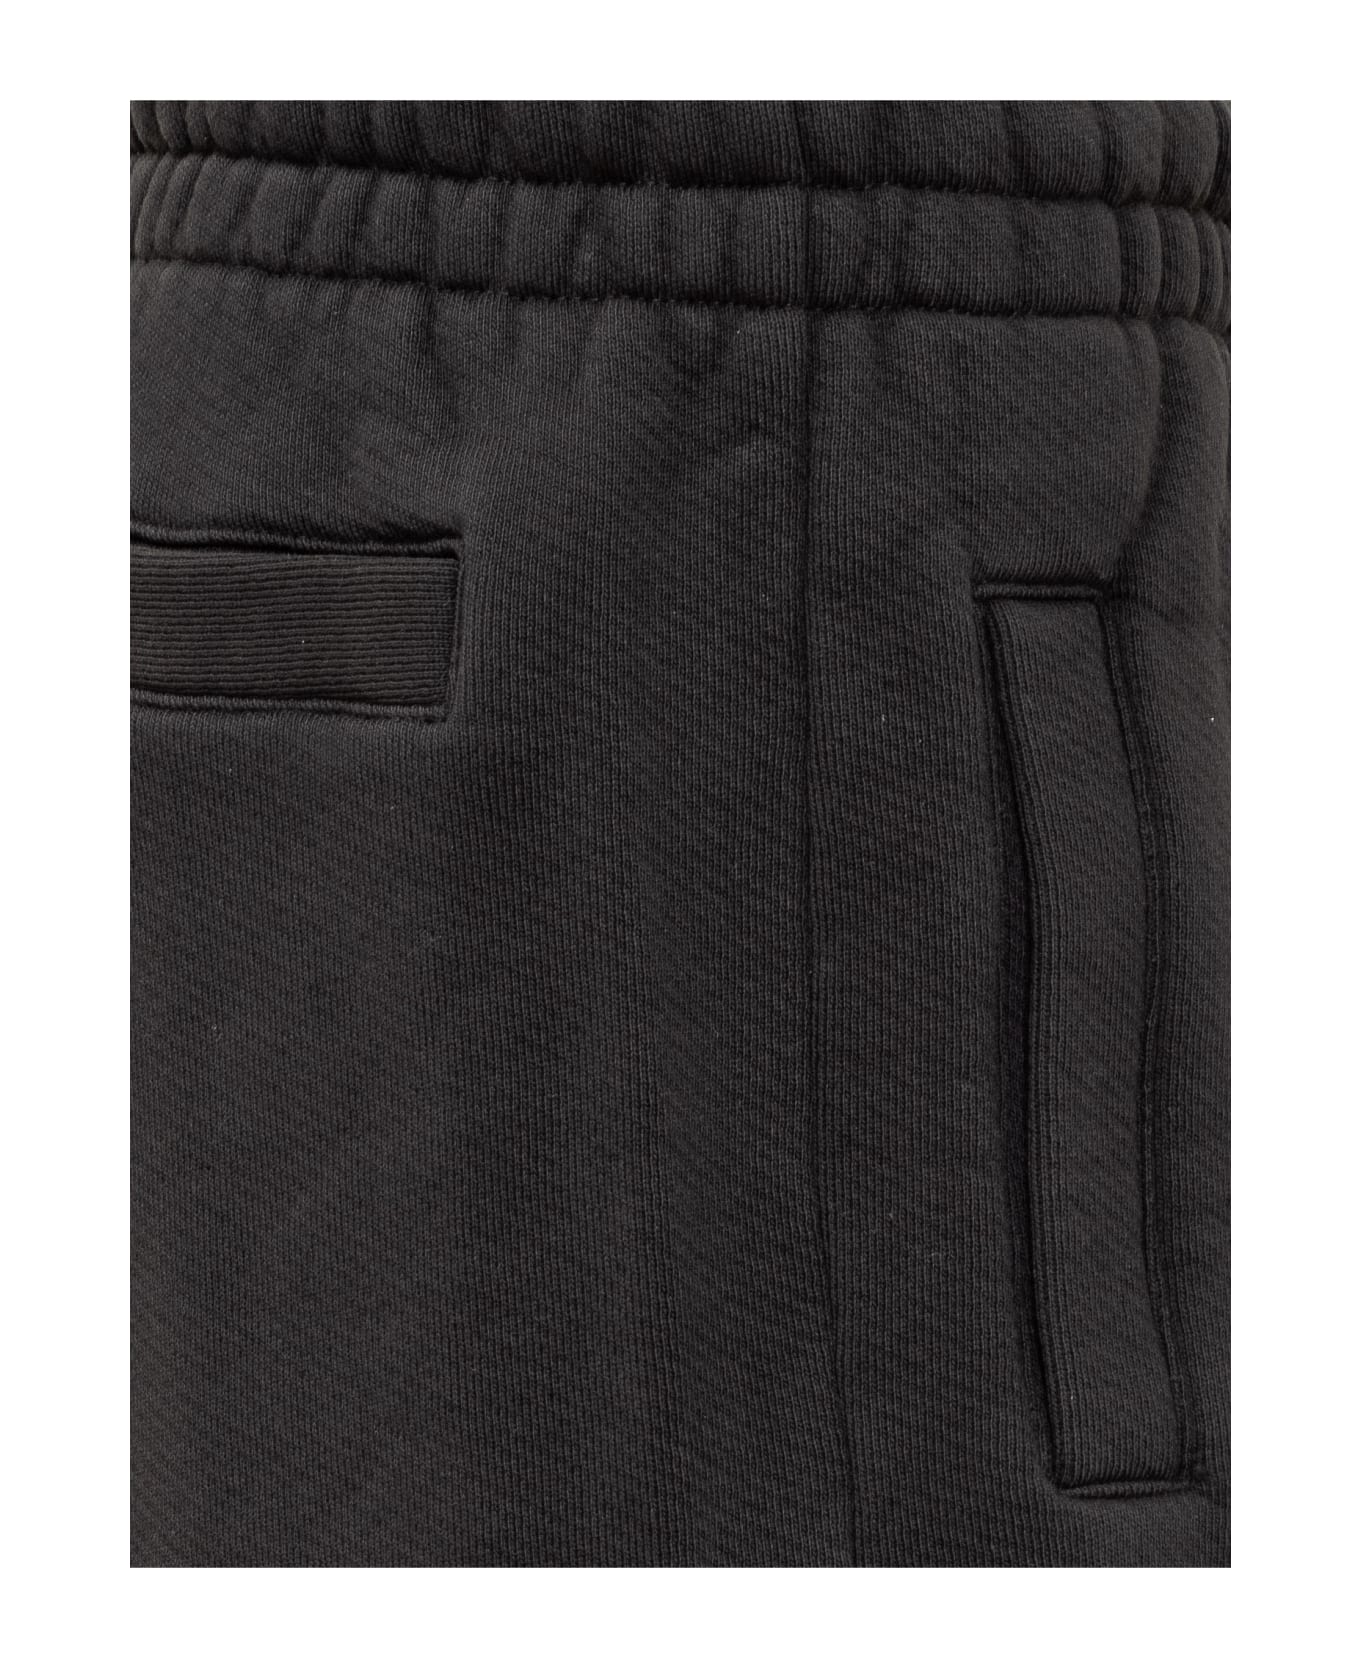 Palm Angels Hunter Cotton Shorts - black